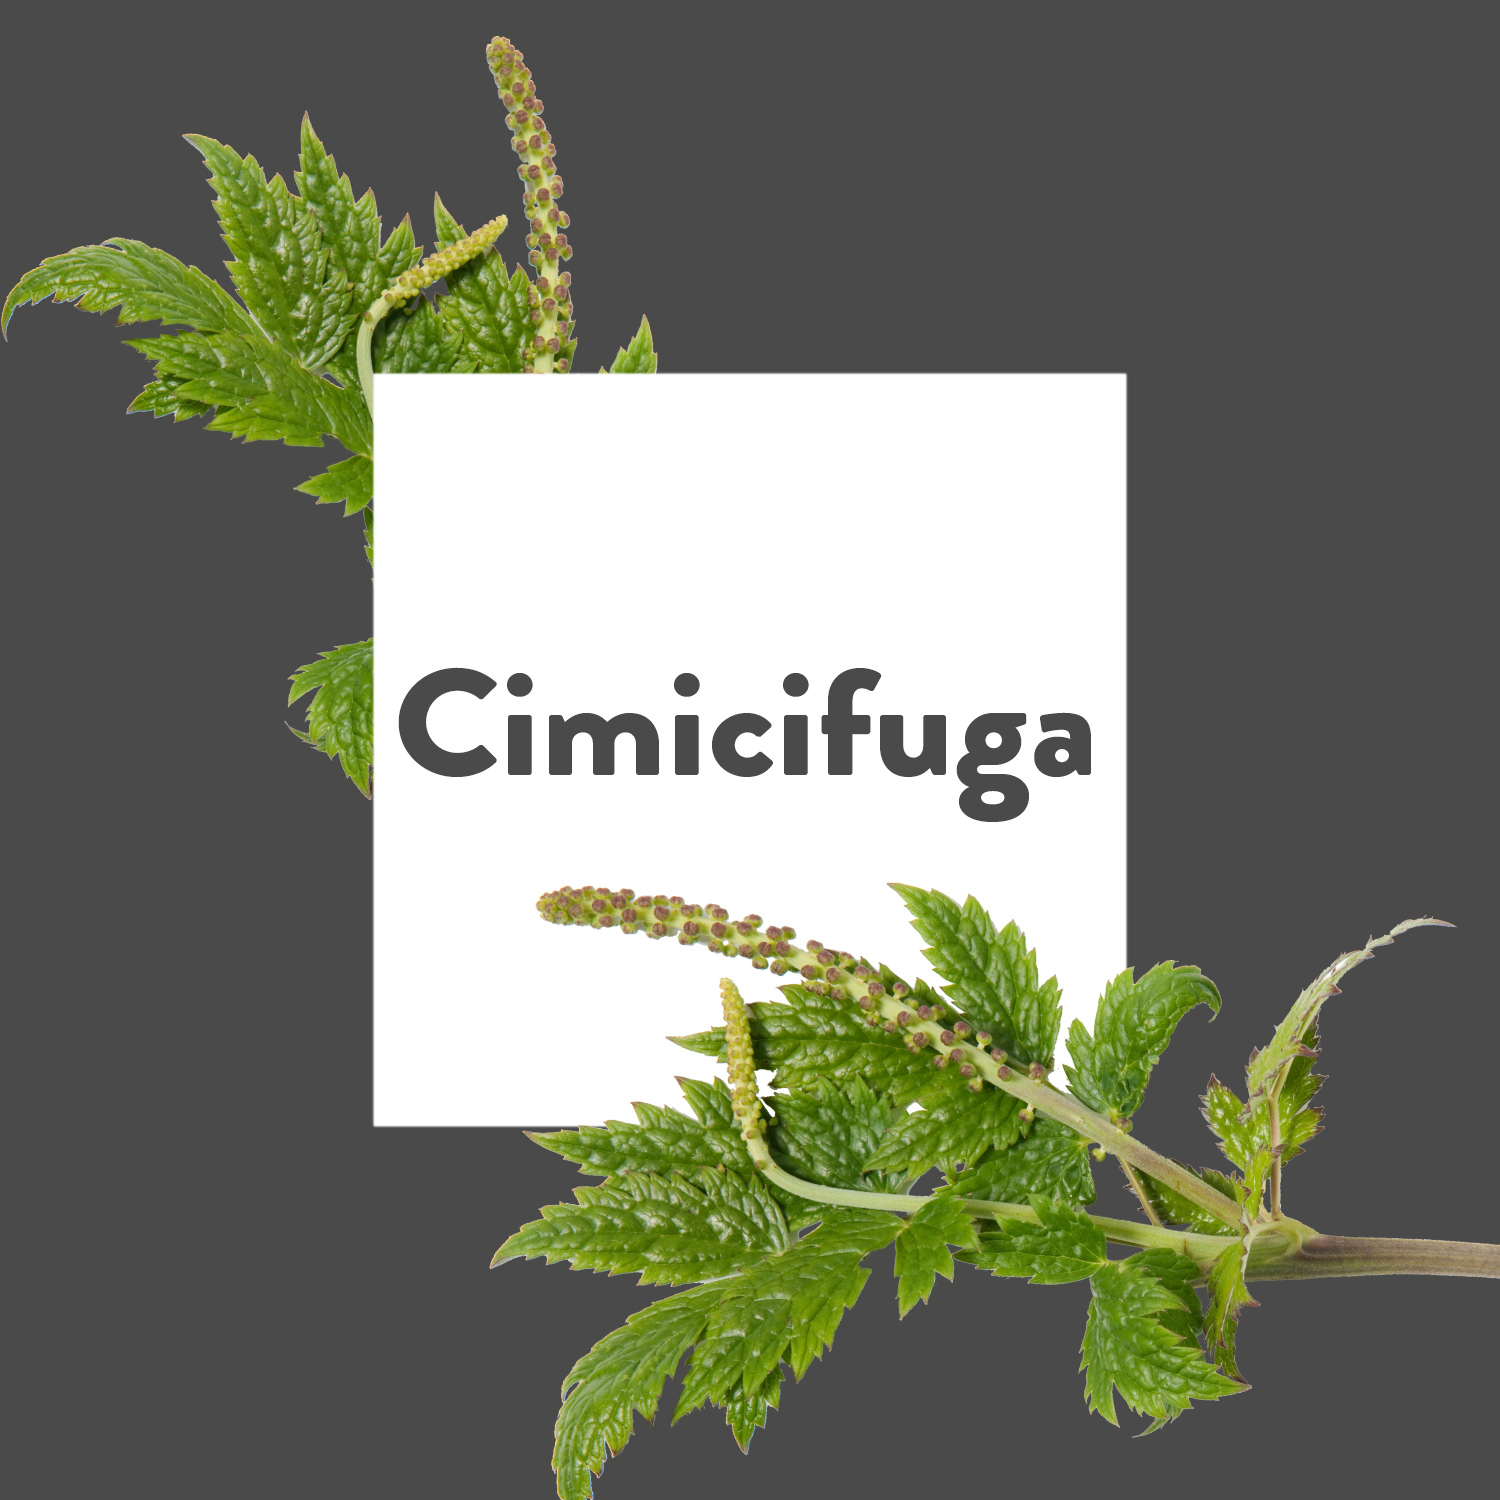 Pflanze des Monats: Cimicifuga